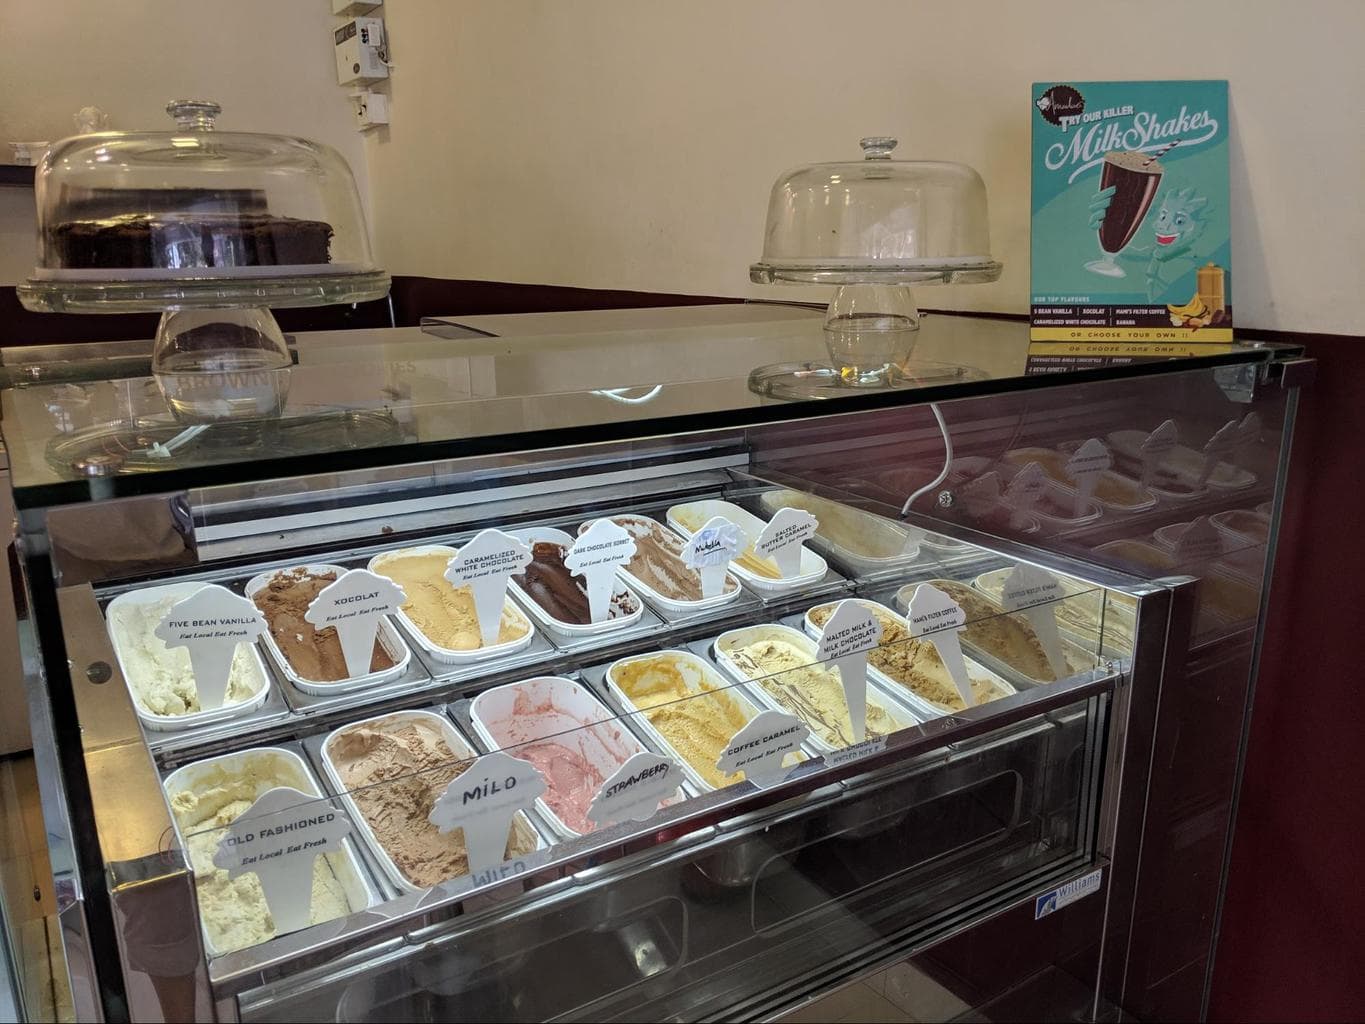 Amadora Gourmet Ice Cream selection